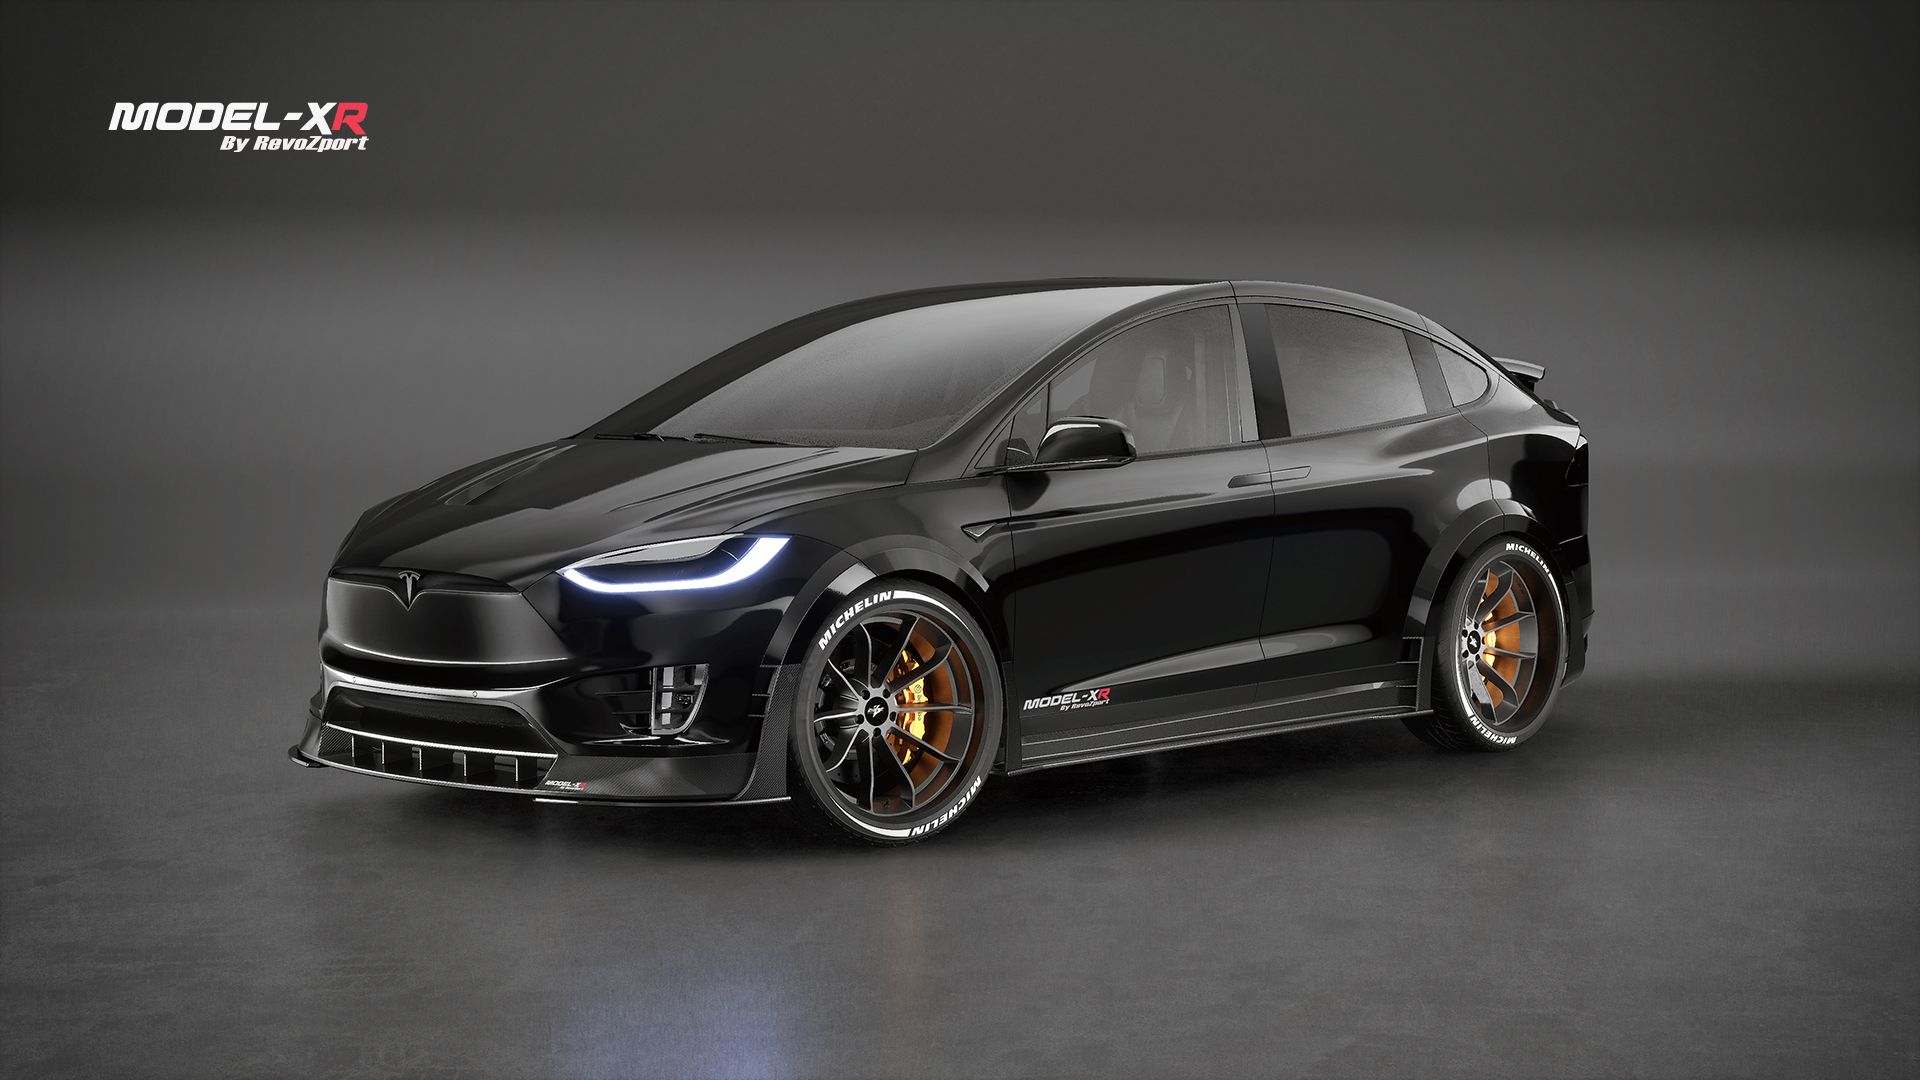 RevoZport's Tesla Model X Goes For The Confused Electric Hatchback Look